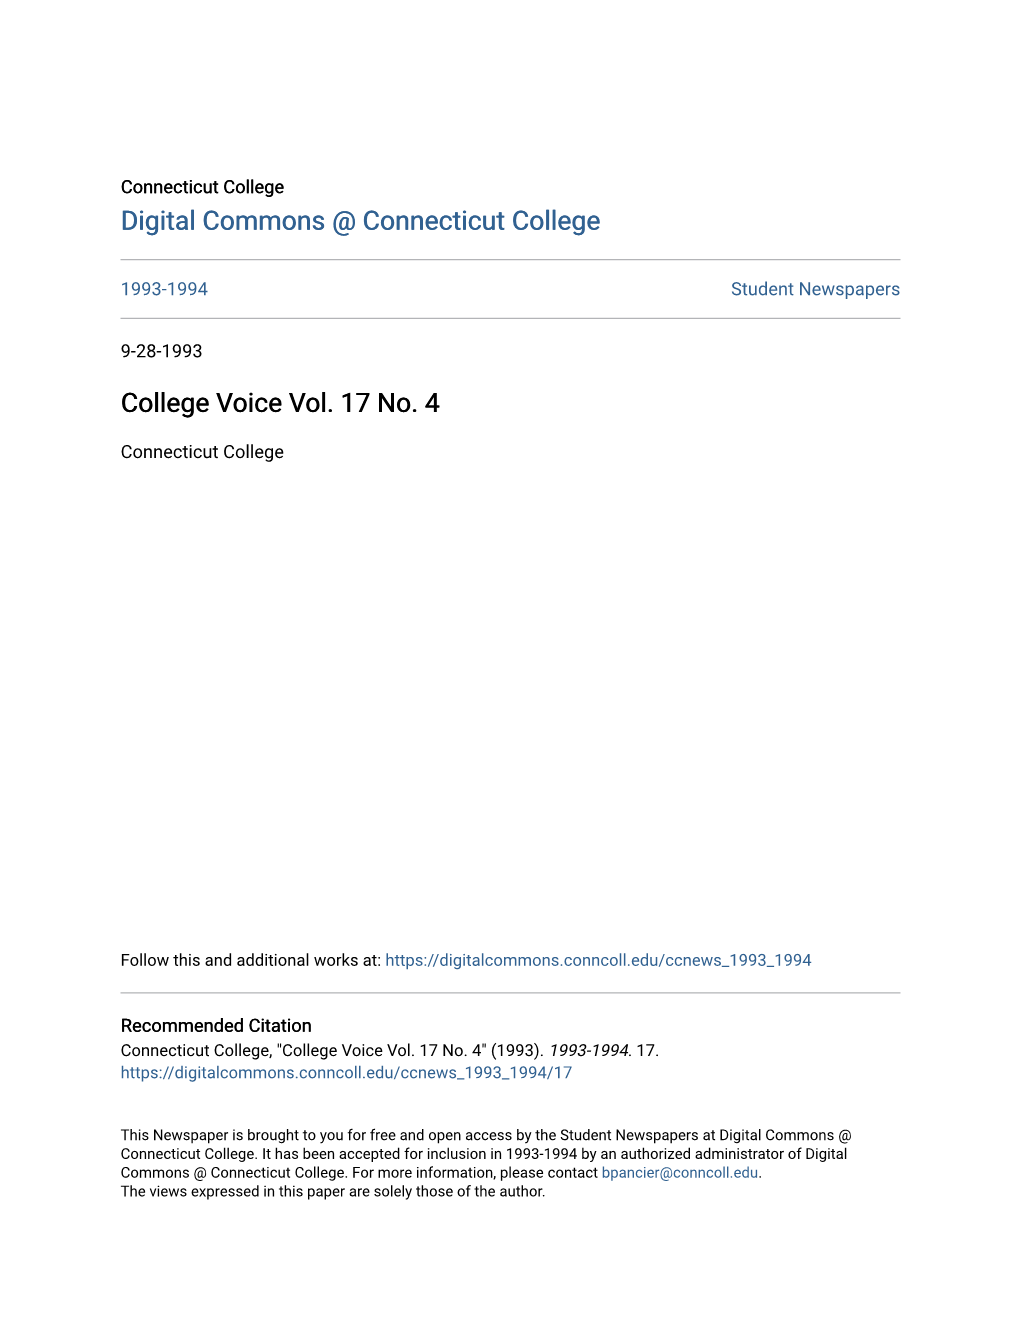 College Voice Vol. 17 No. 4